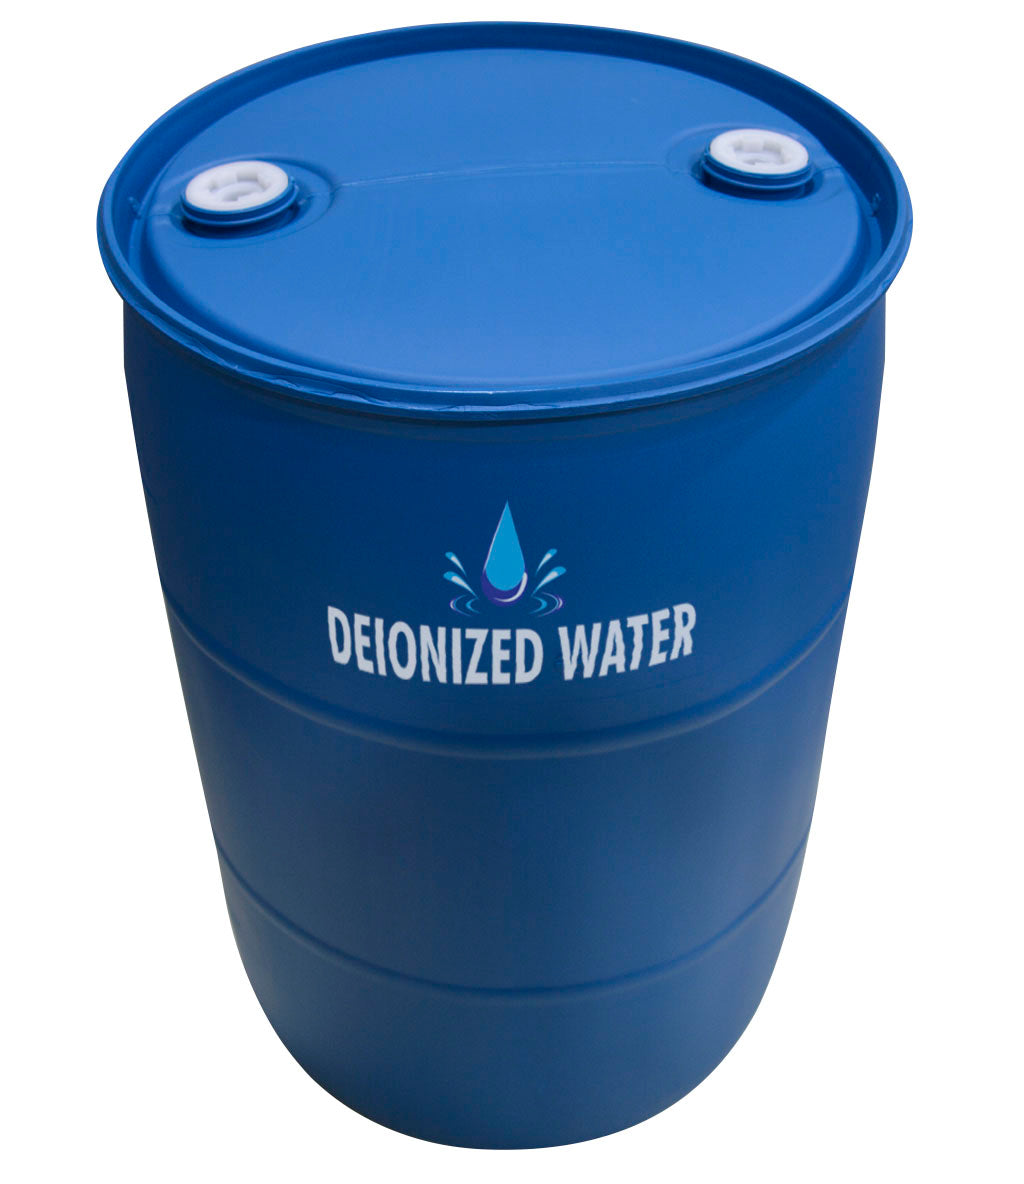 Bulk deionized water (di water) in 55 gallon drum.